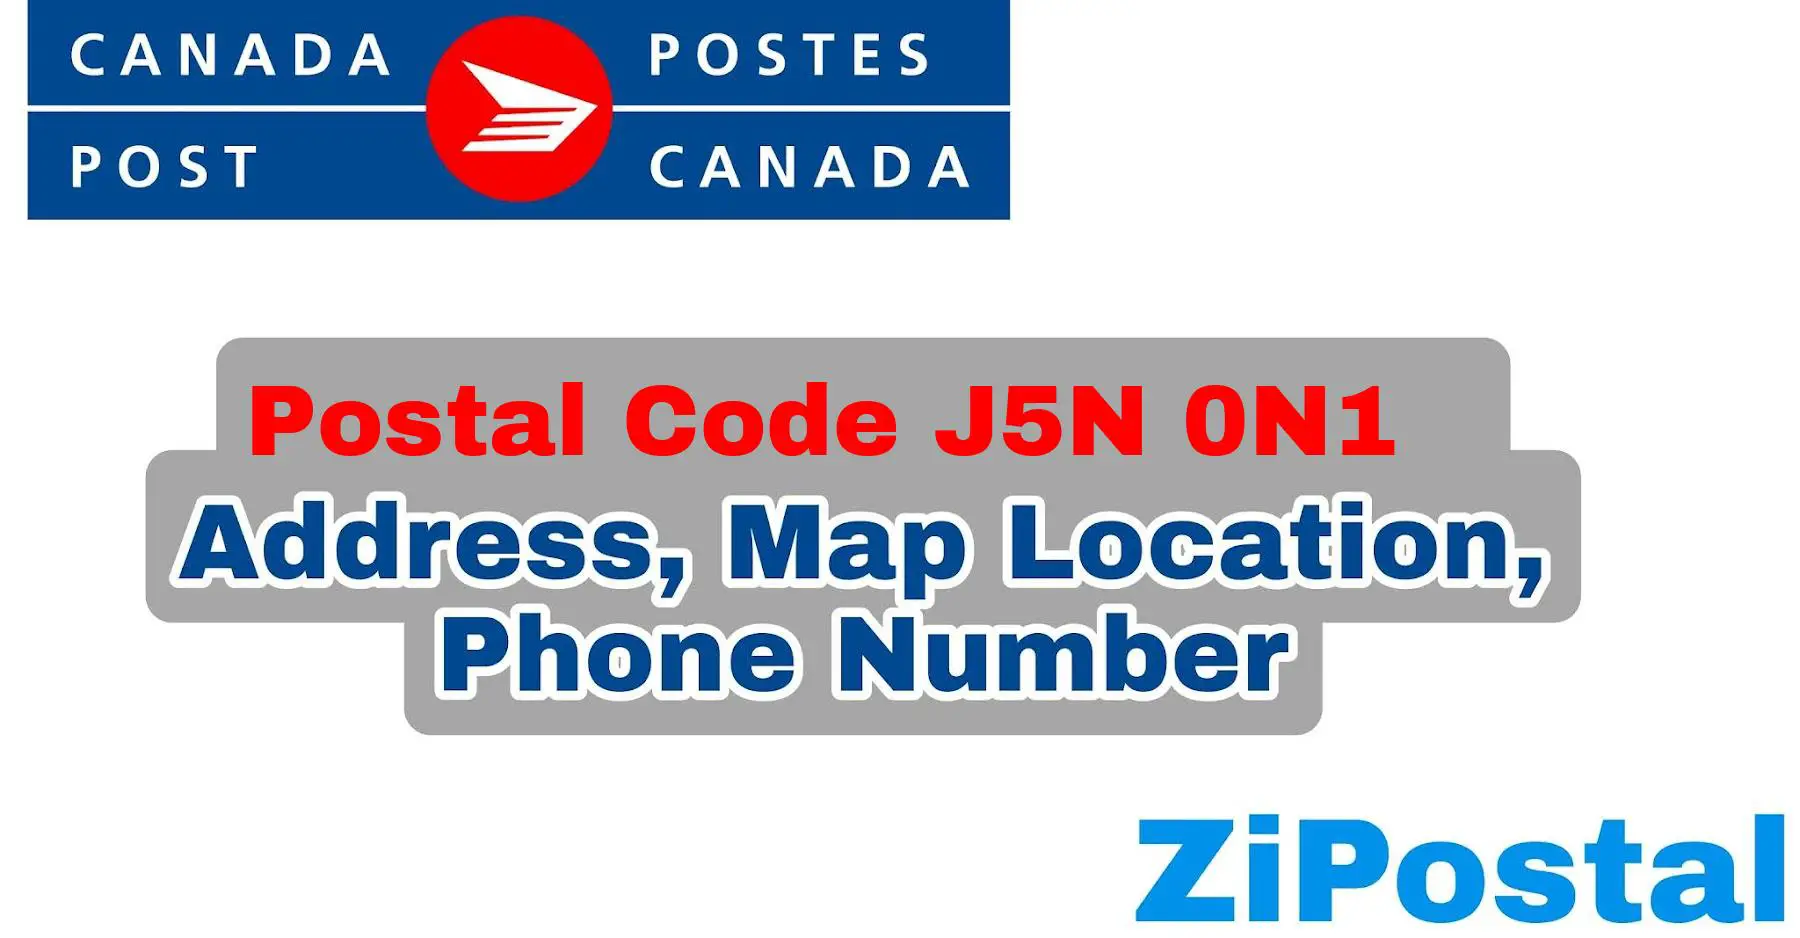 Postal Code J5N 0N1 Address Map Location and Phone Number